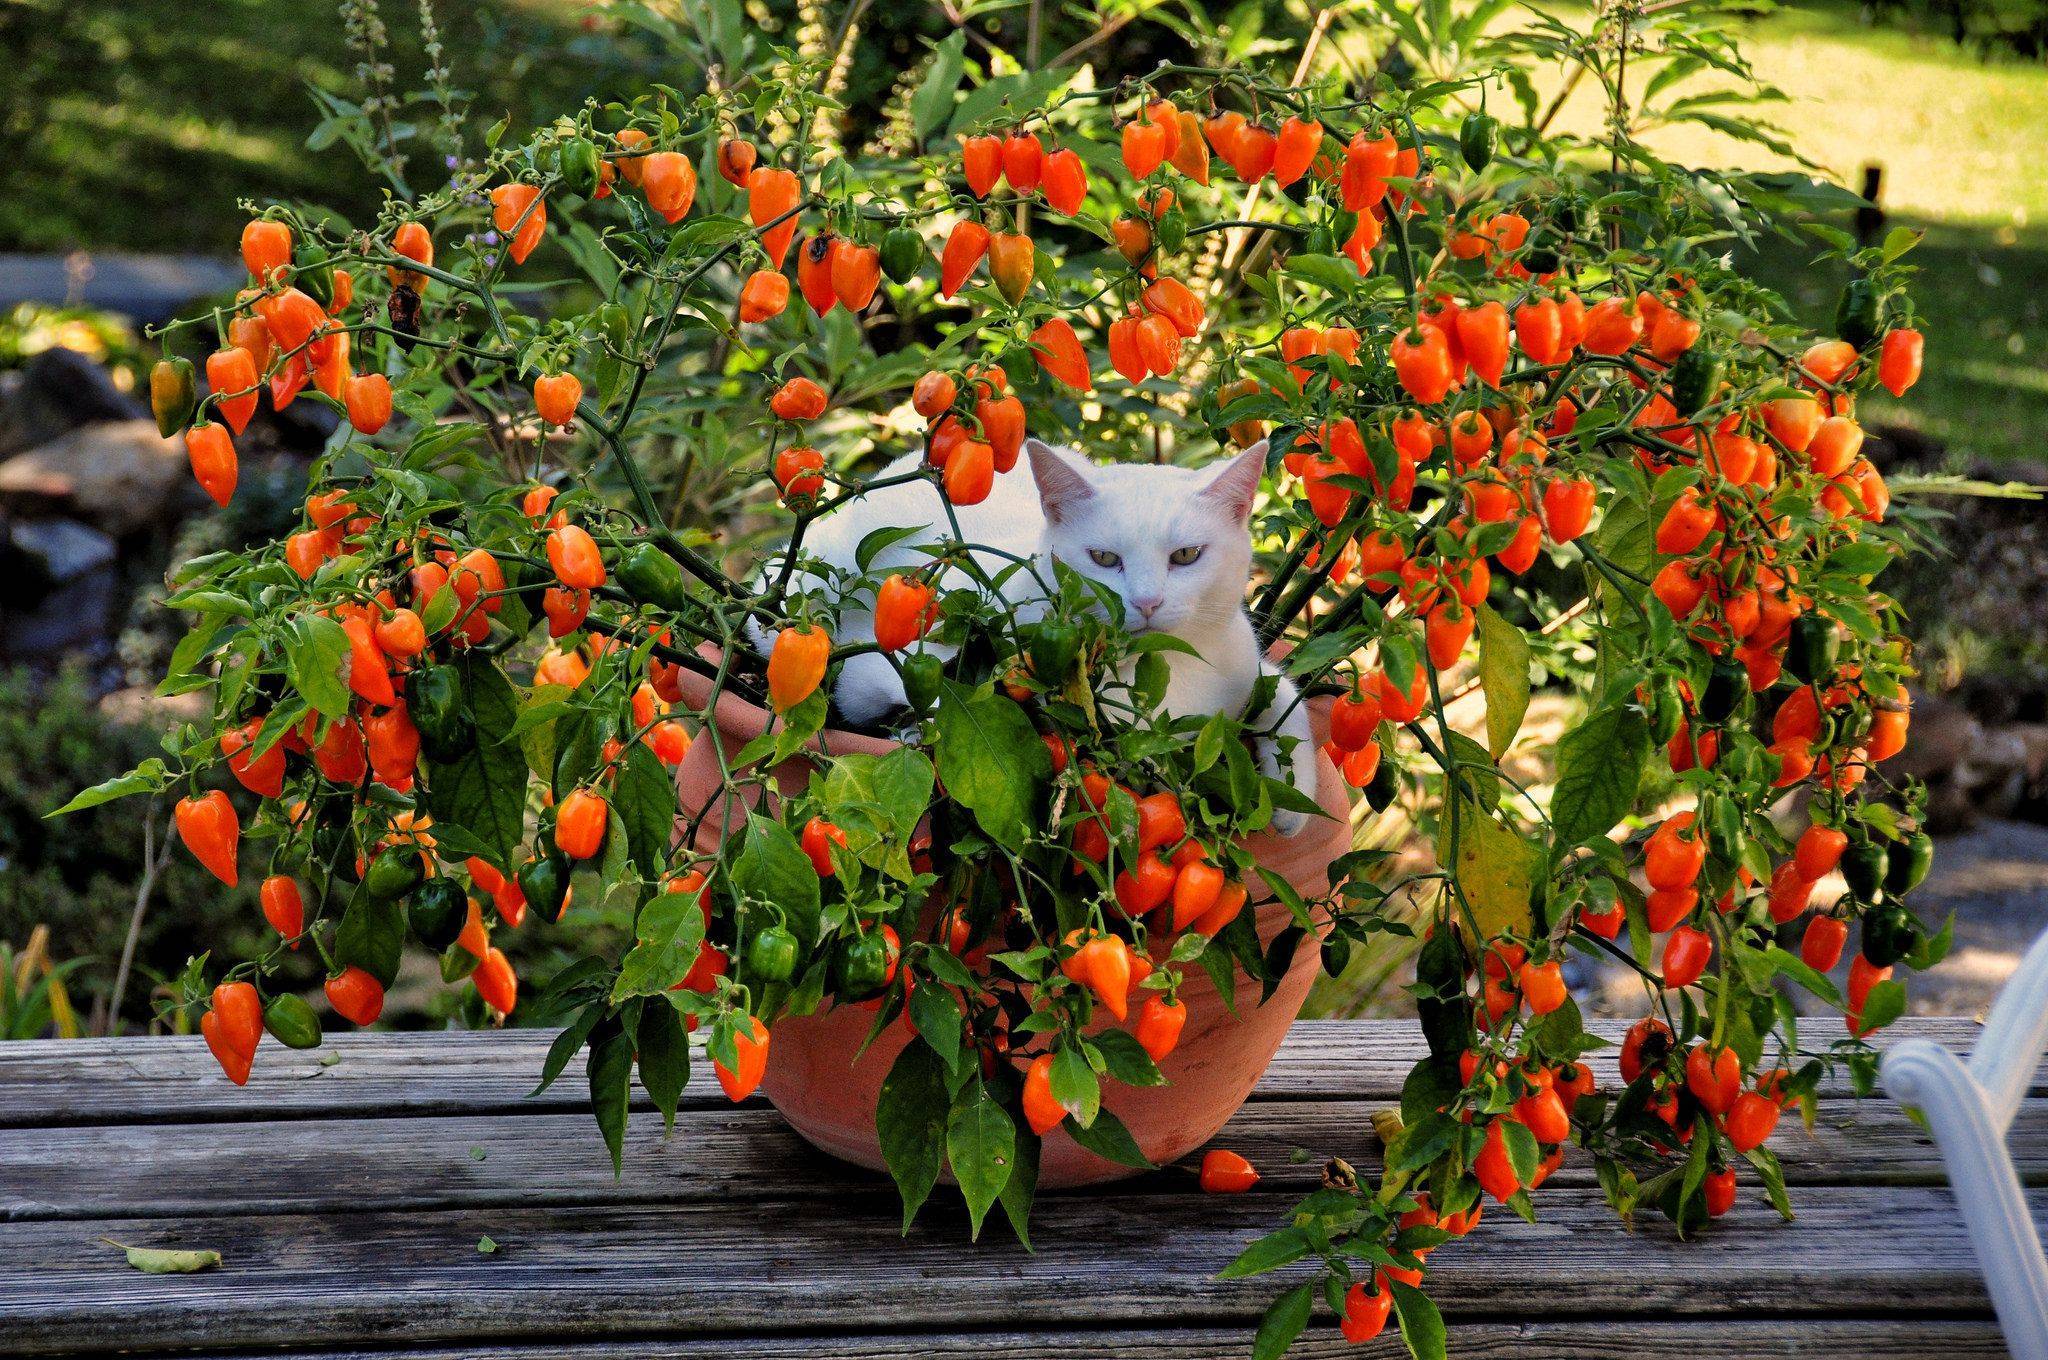 Перец хабанеро: фото, свойства, выращивание в домашних условиях, срок плодоношения